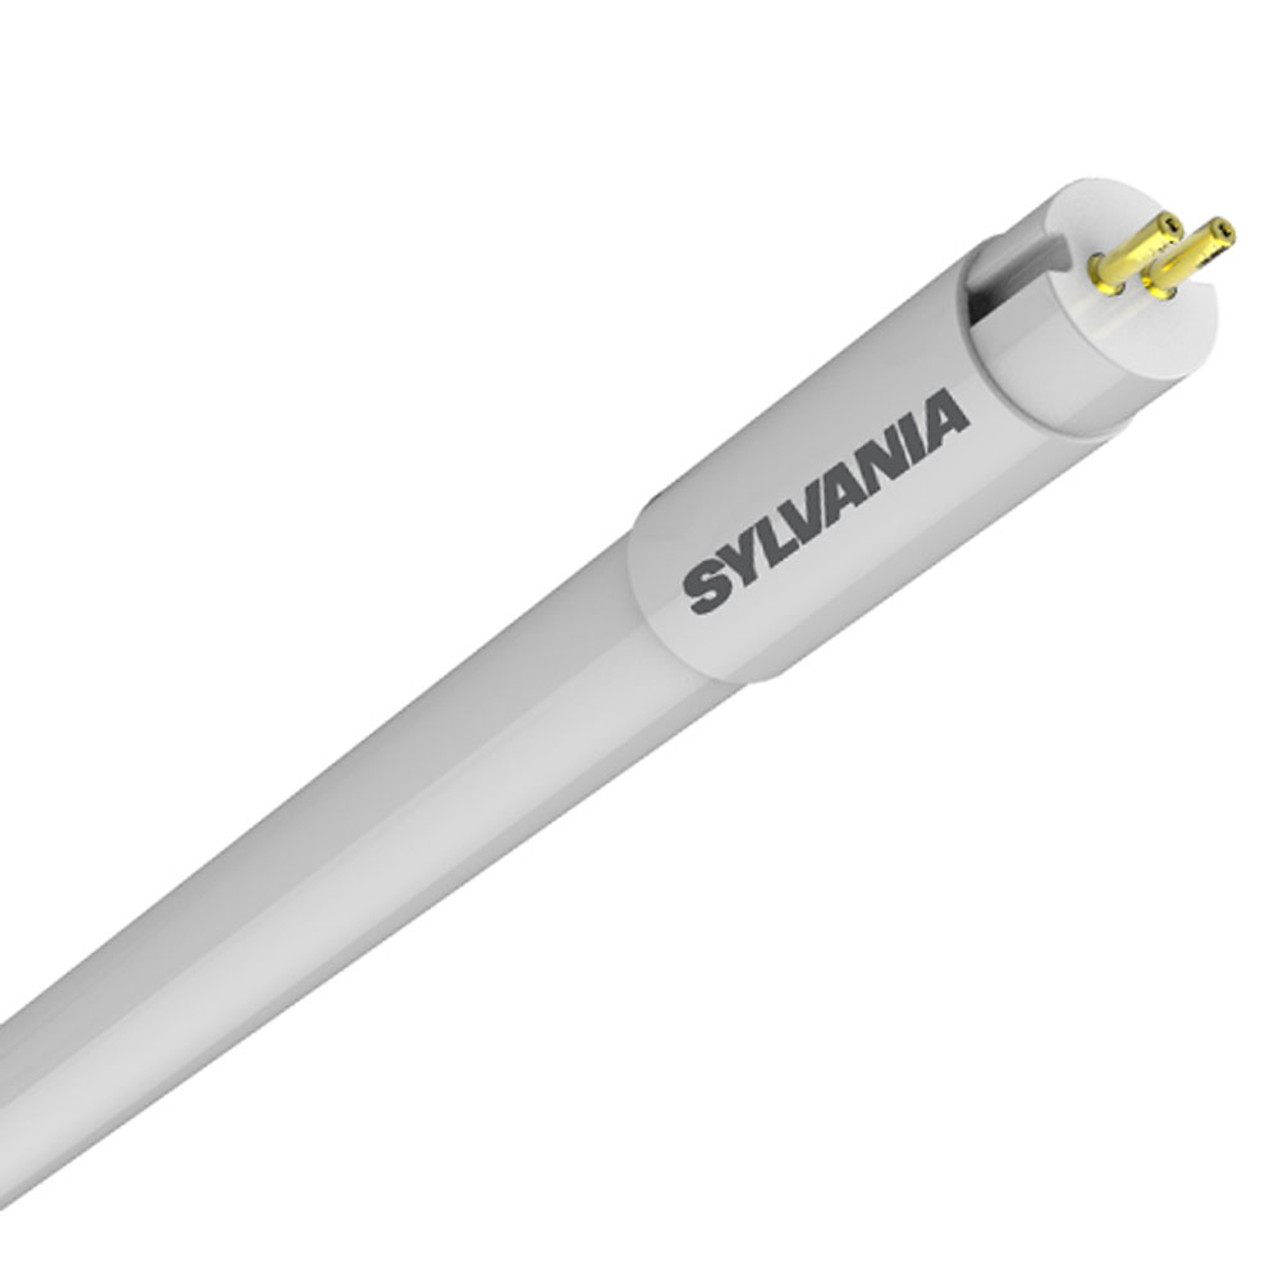 37W (80W) LED T5 Tube Cool White 1449mm 5600lm AC Mains Sylvania